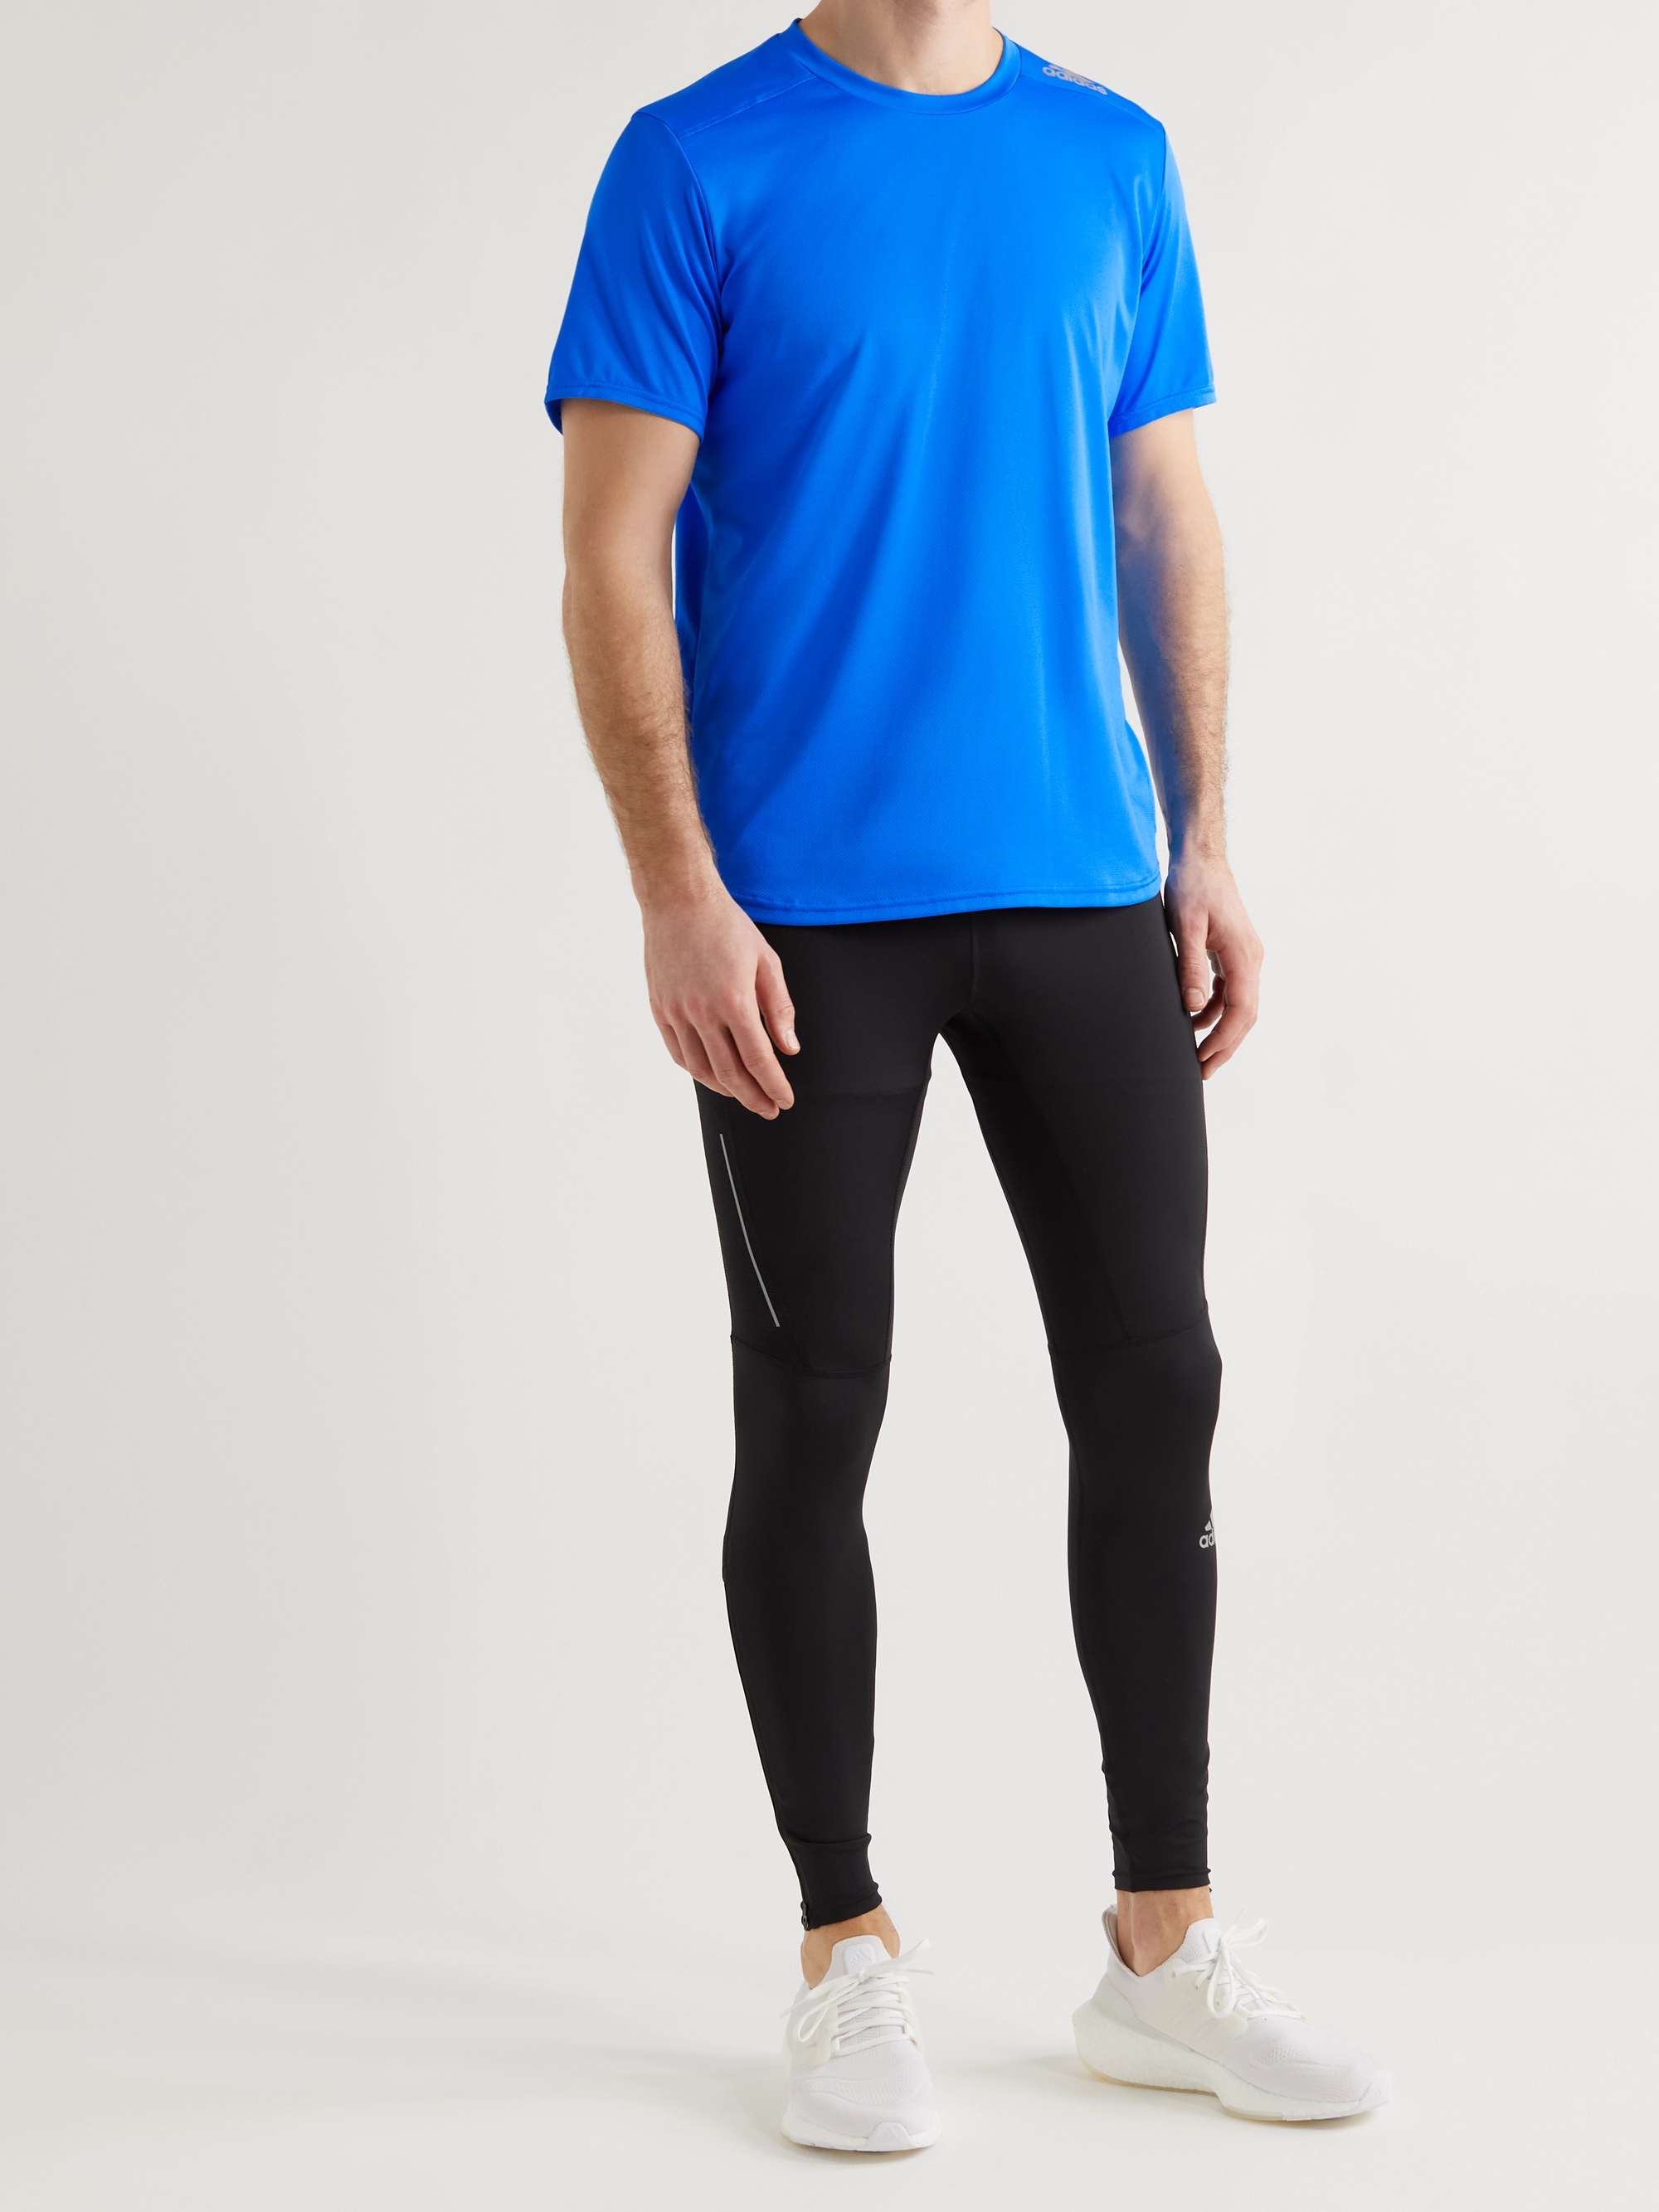 ADIDAS SPORT Designed 4 Running Recycled AEROREADY Jersey T-Shirt